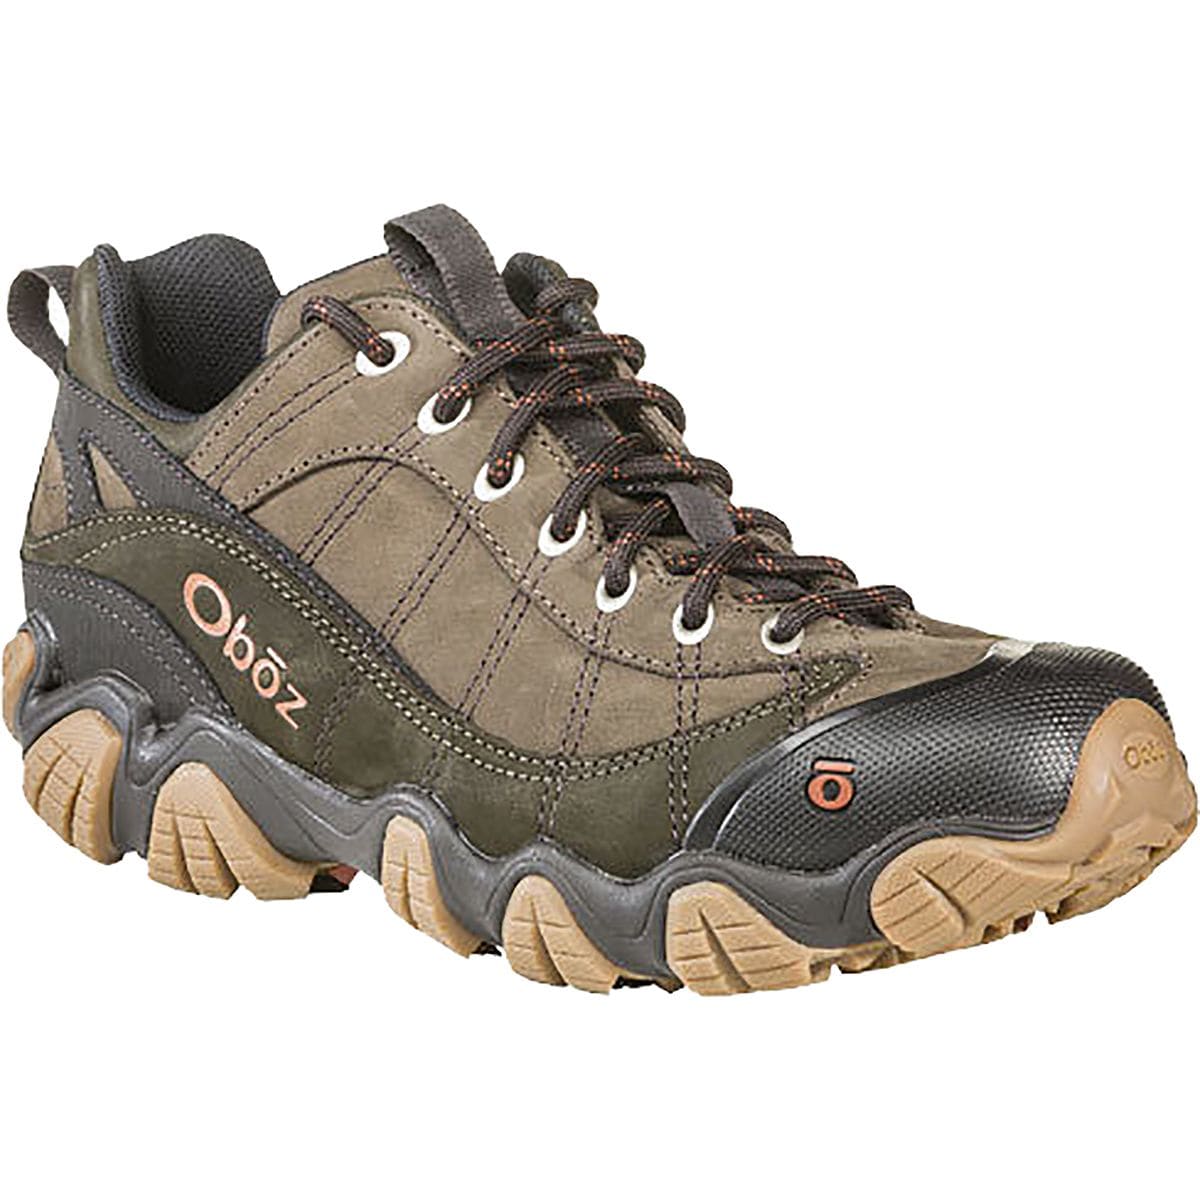 Oboz Firebrand II Low Leather Hiking Shoe - Men's | Backcountry.com